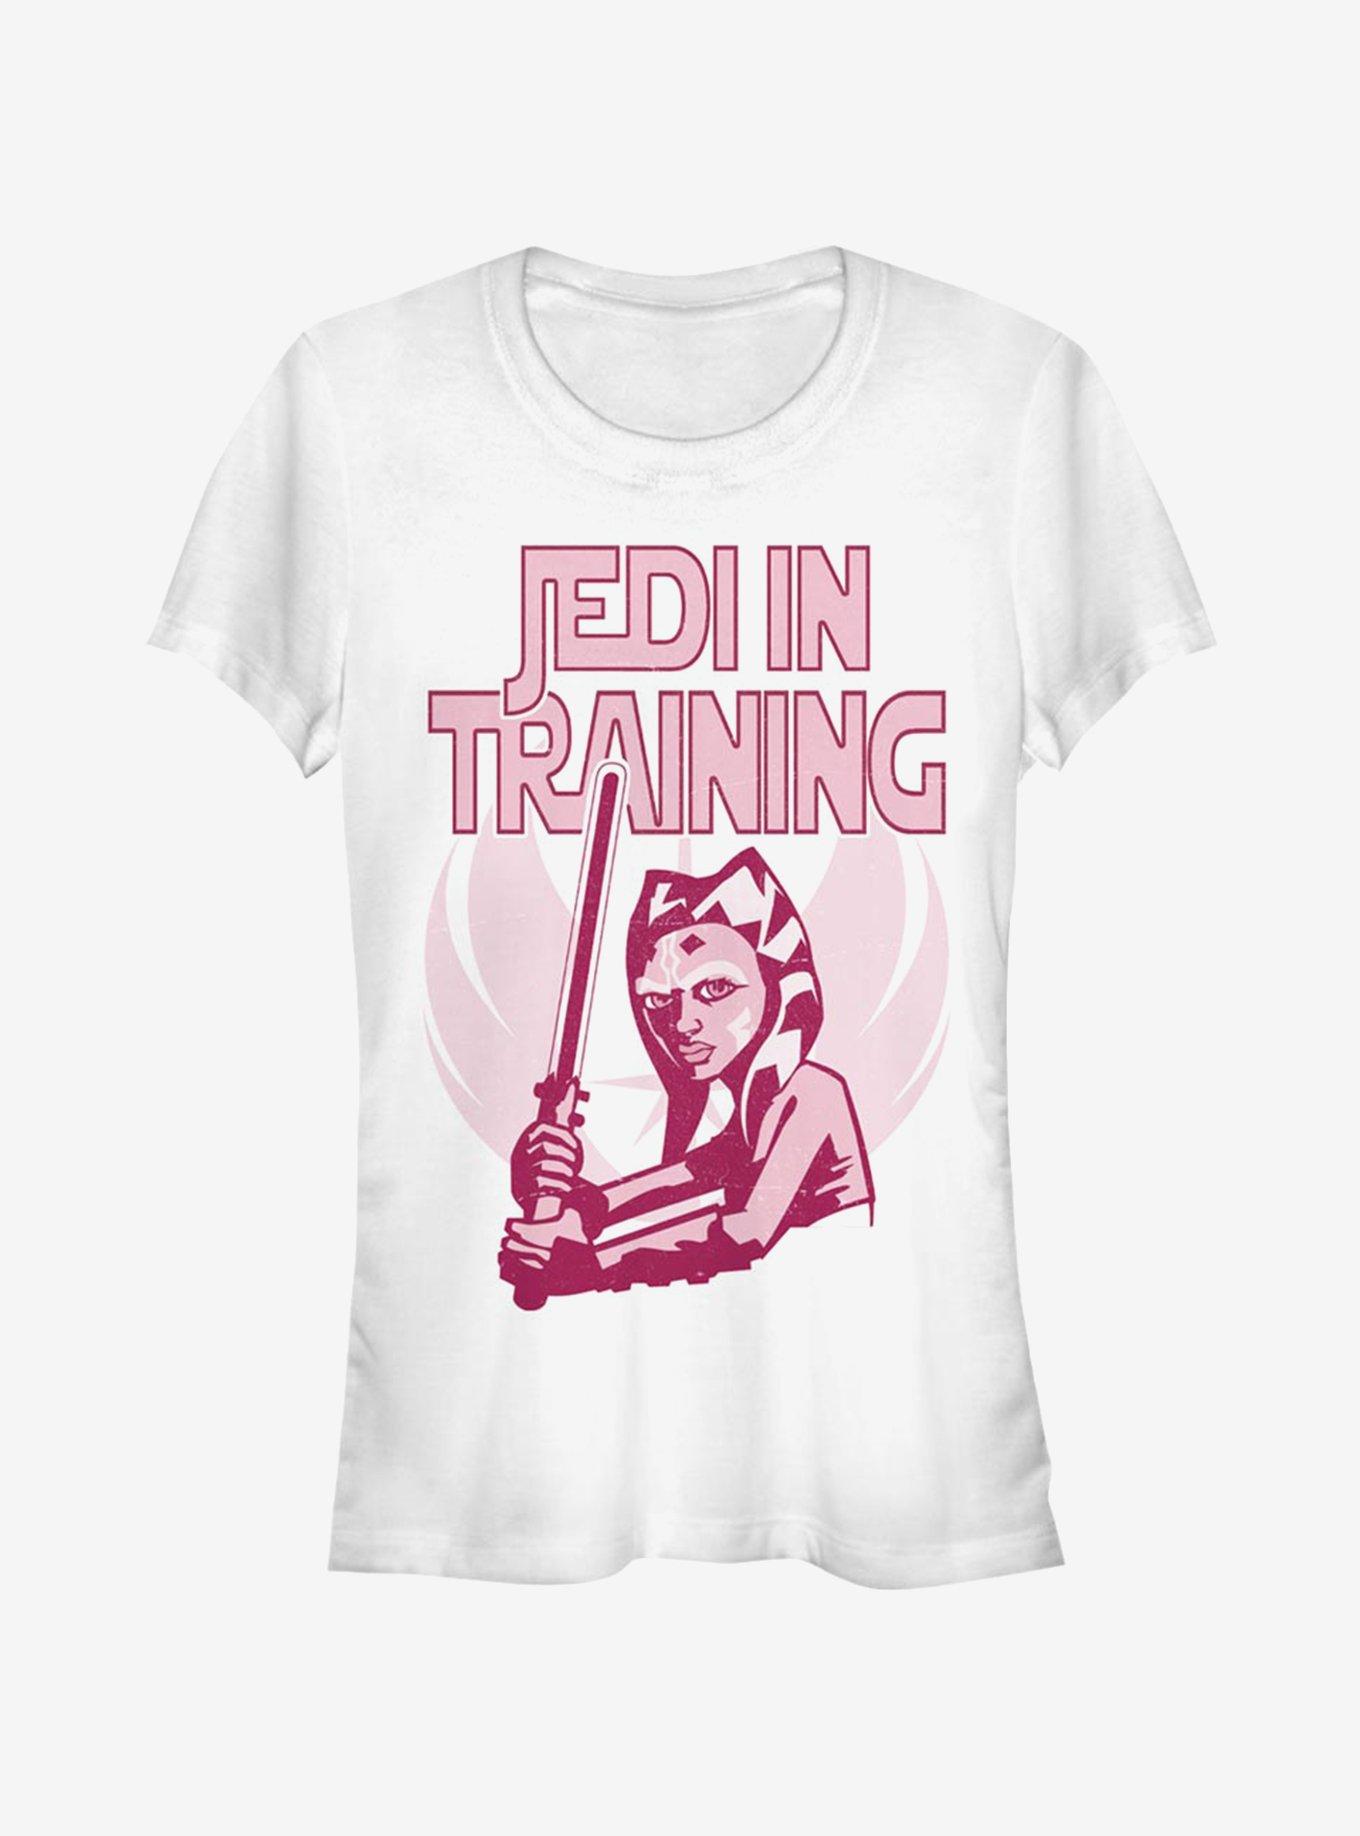 Star Wars The Clone Jedi Training Girls T-Shirt